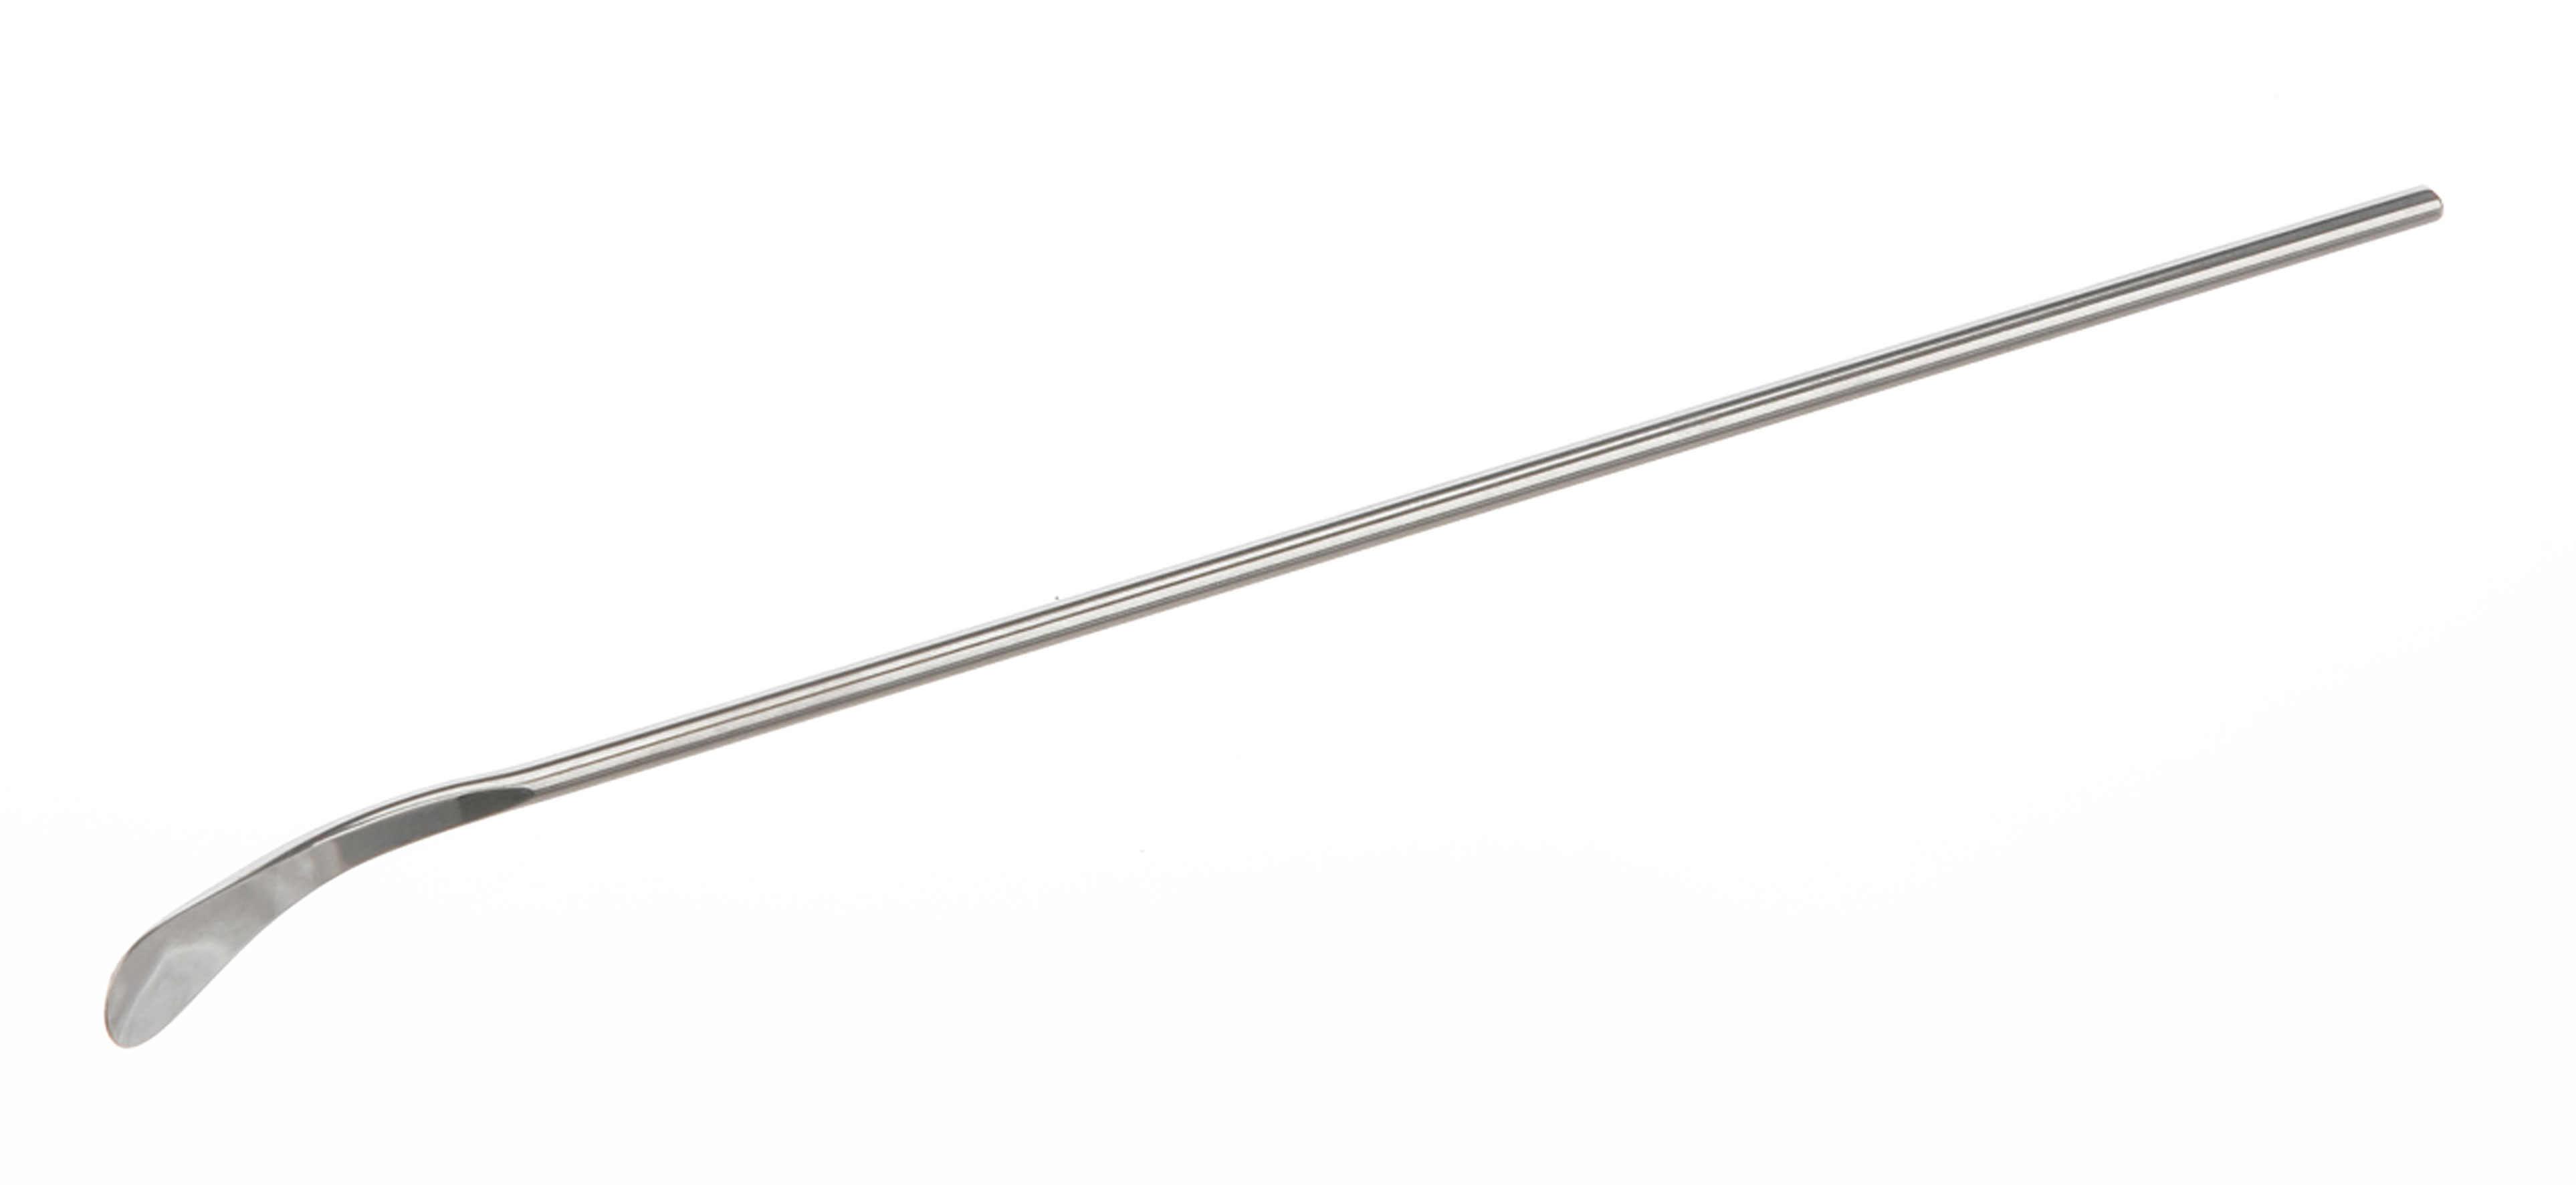 Spoon shaped spatula. Length/Width (mm): 5x185